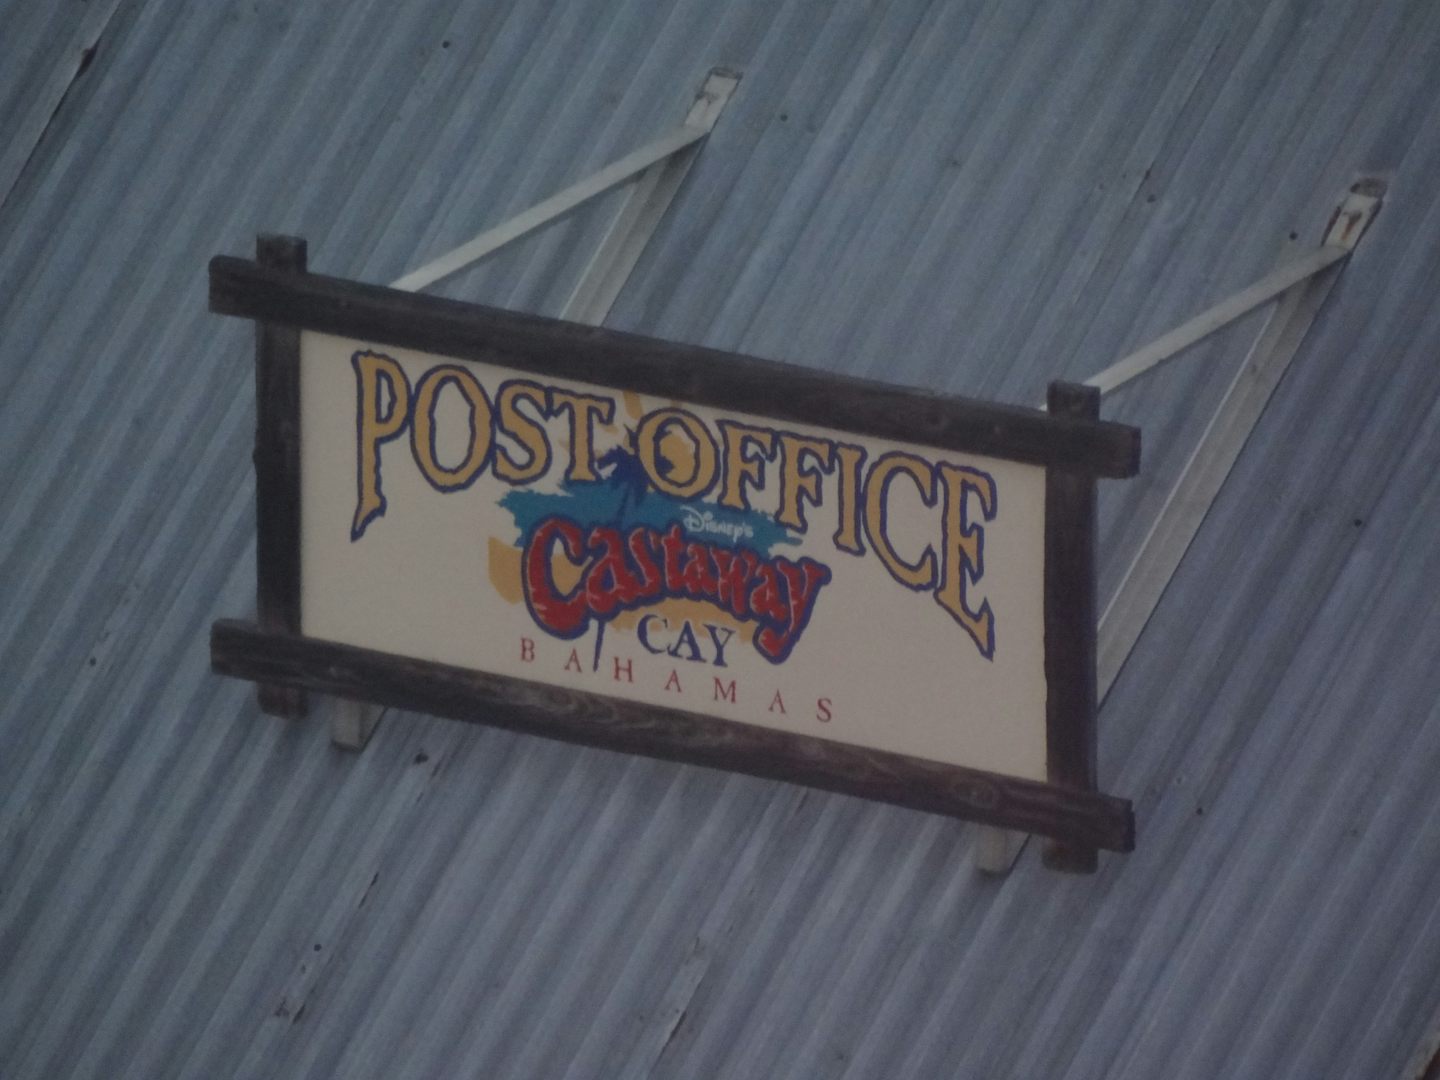 Castaway Cay Post Office